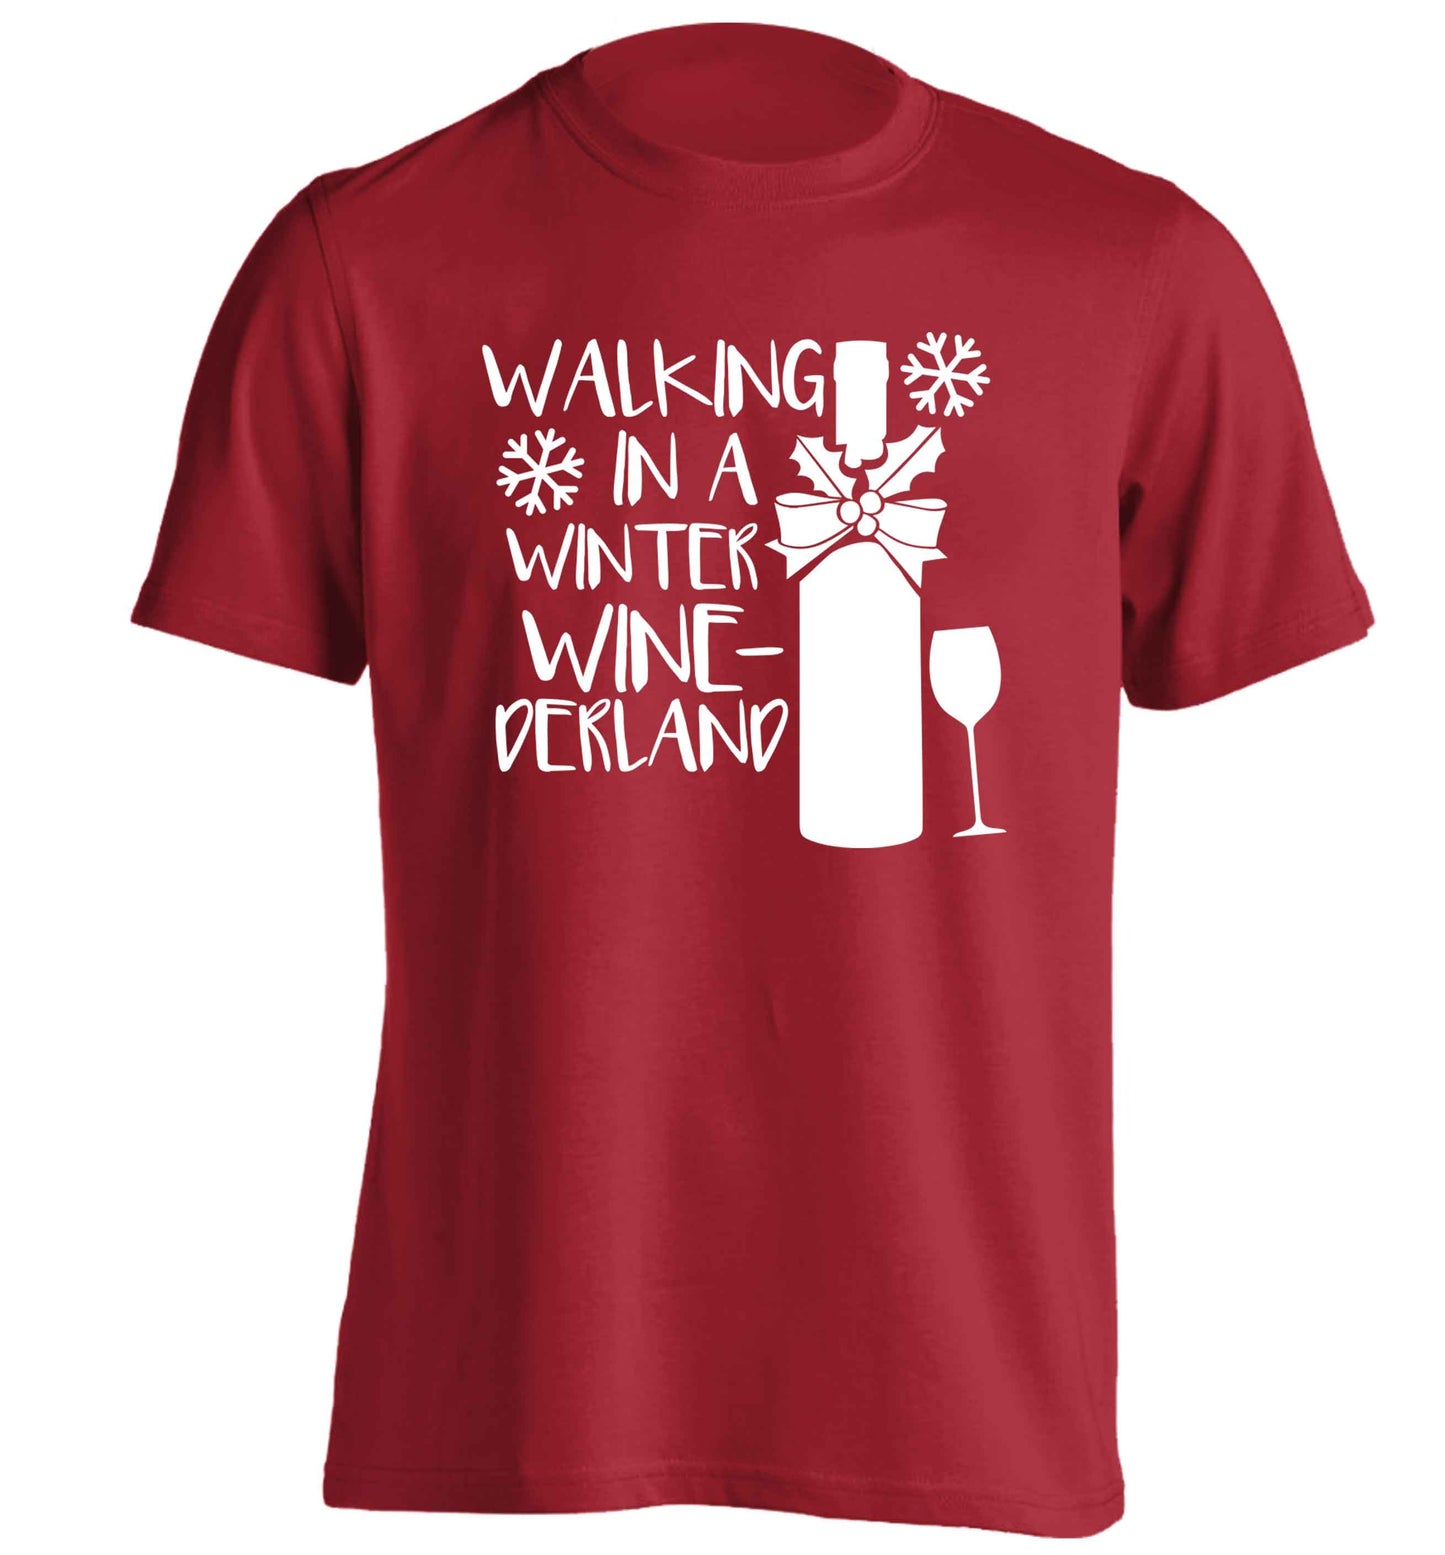 Walking in a wine-derwonderland adults unisex red Tshirt 2XL